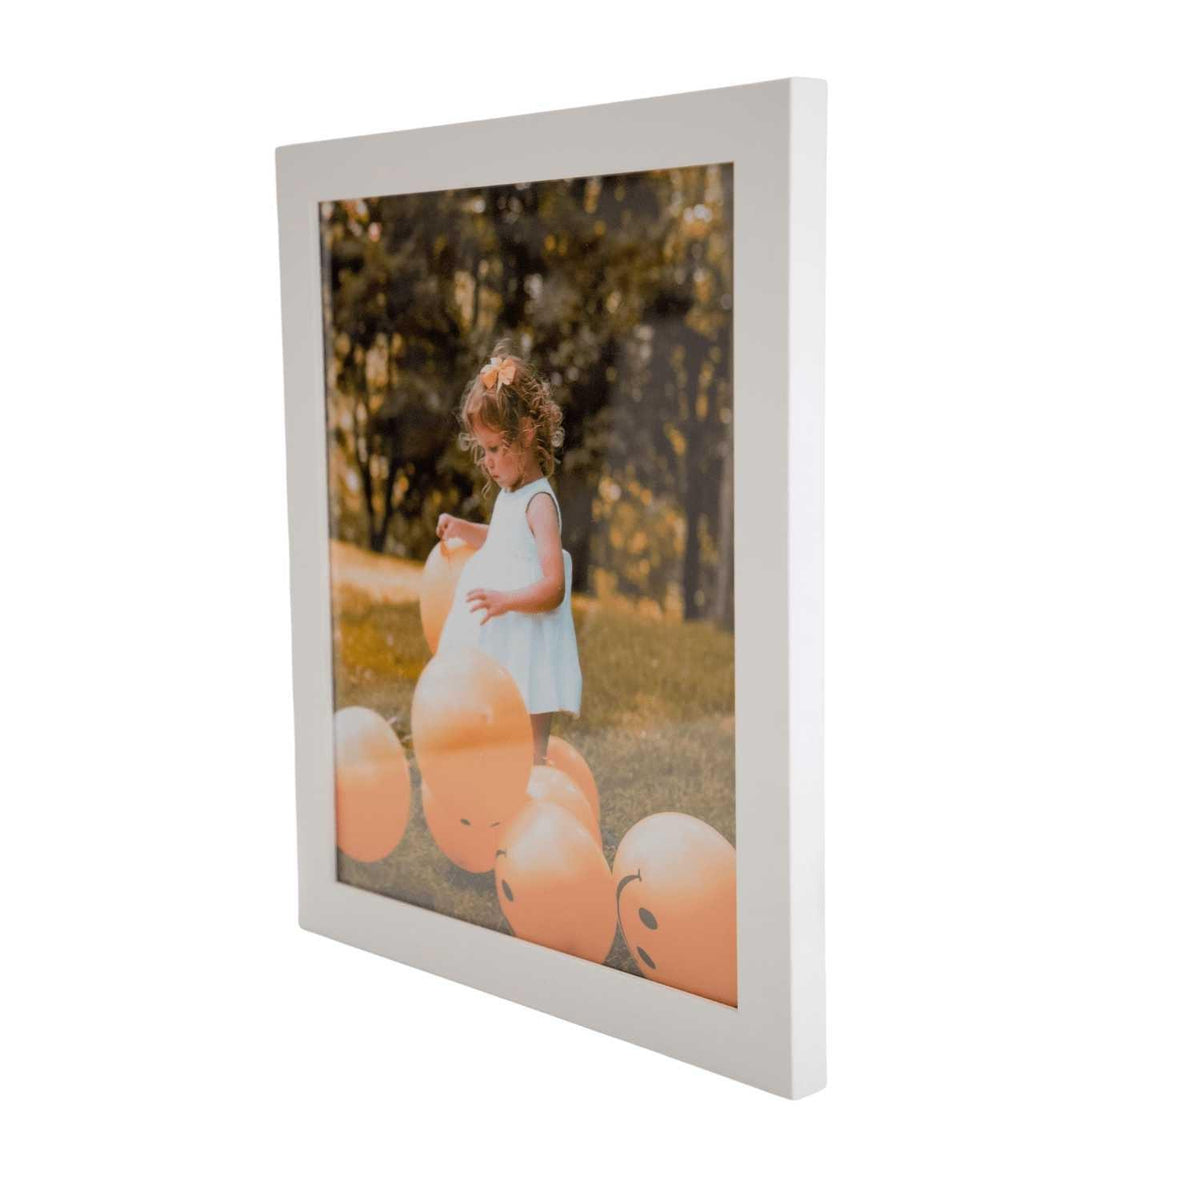 Buy Frame Mora Premium White 24x30 cm here 